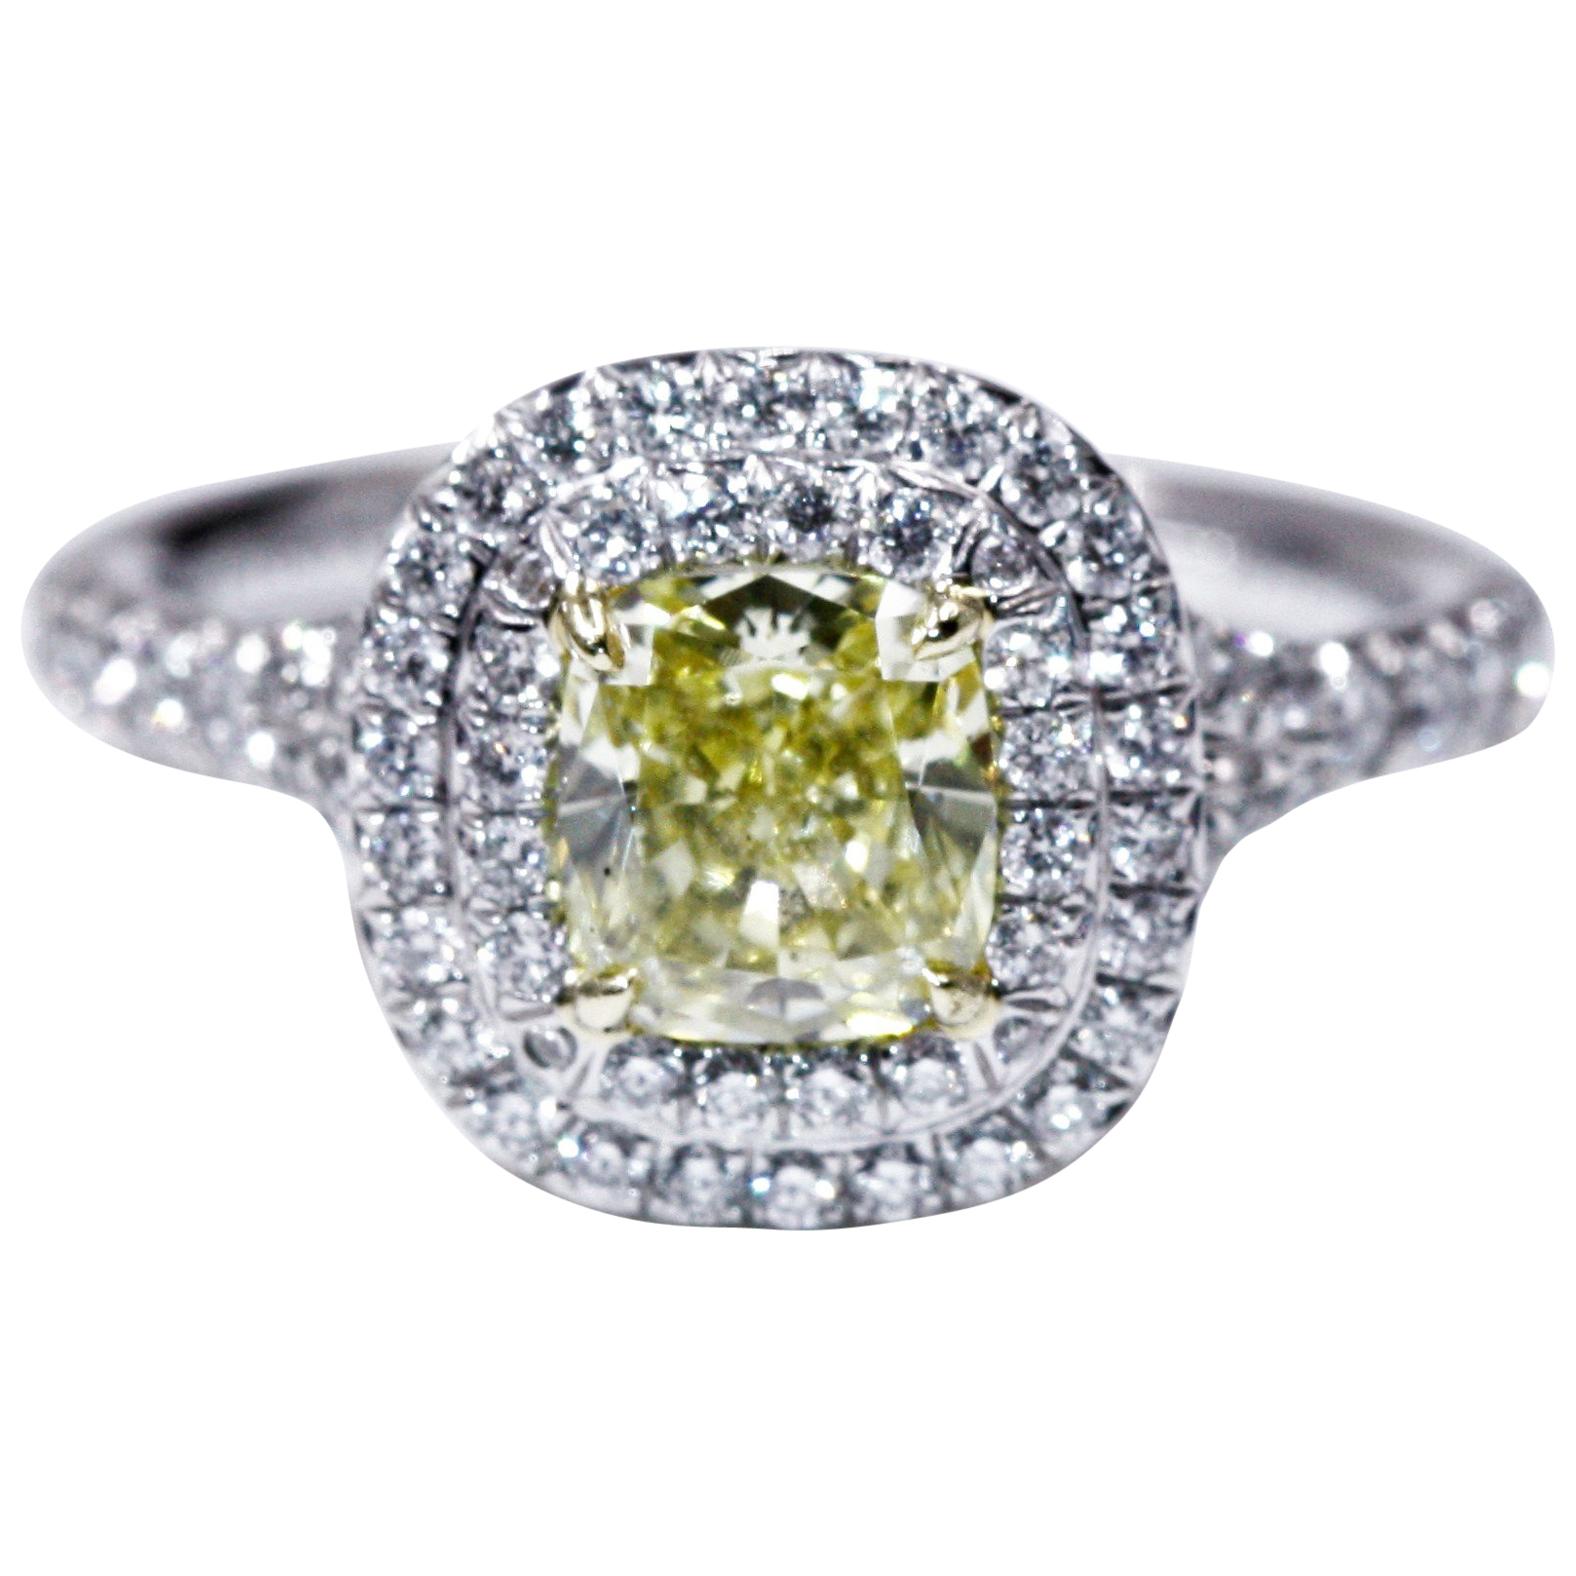 Tiffany & Co. Square Fancy Intense Yellow Diamond Ring 0.92 Carat, VS2 For Sale